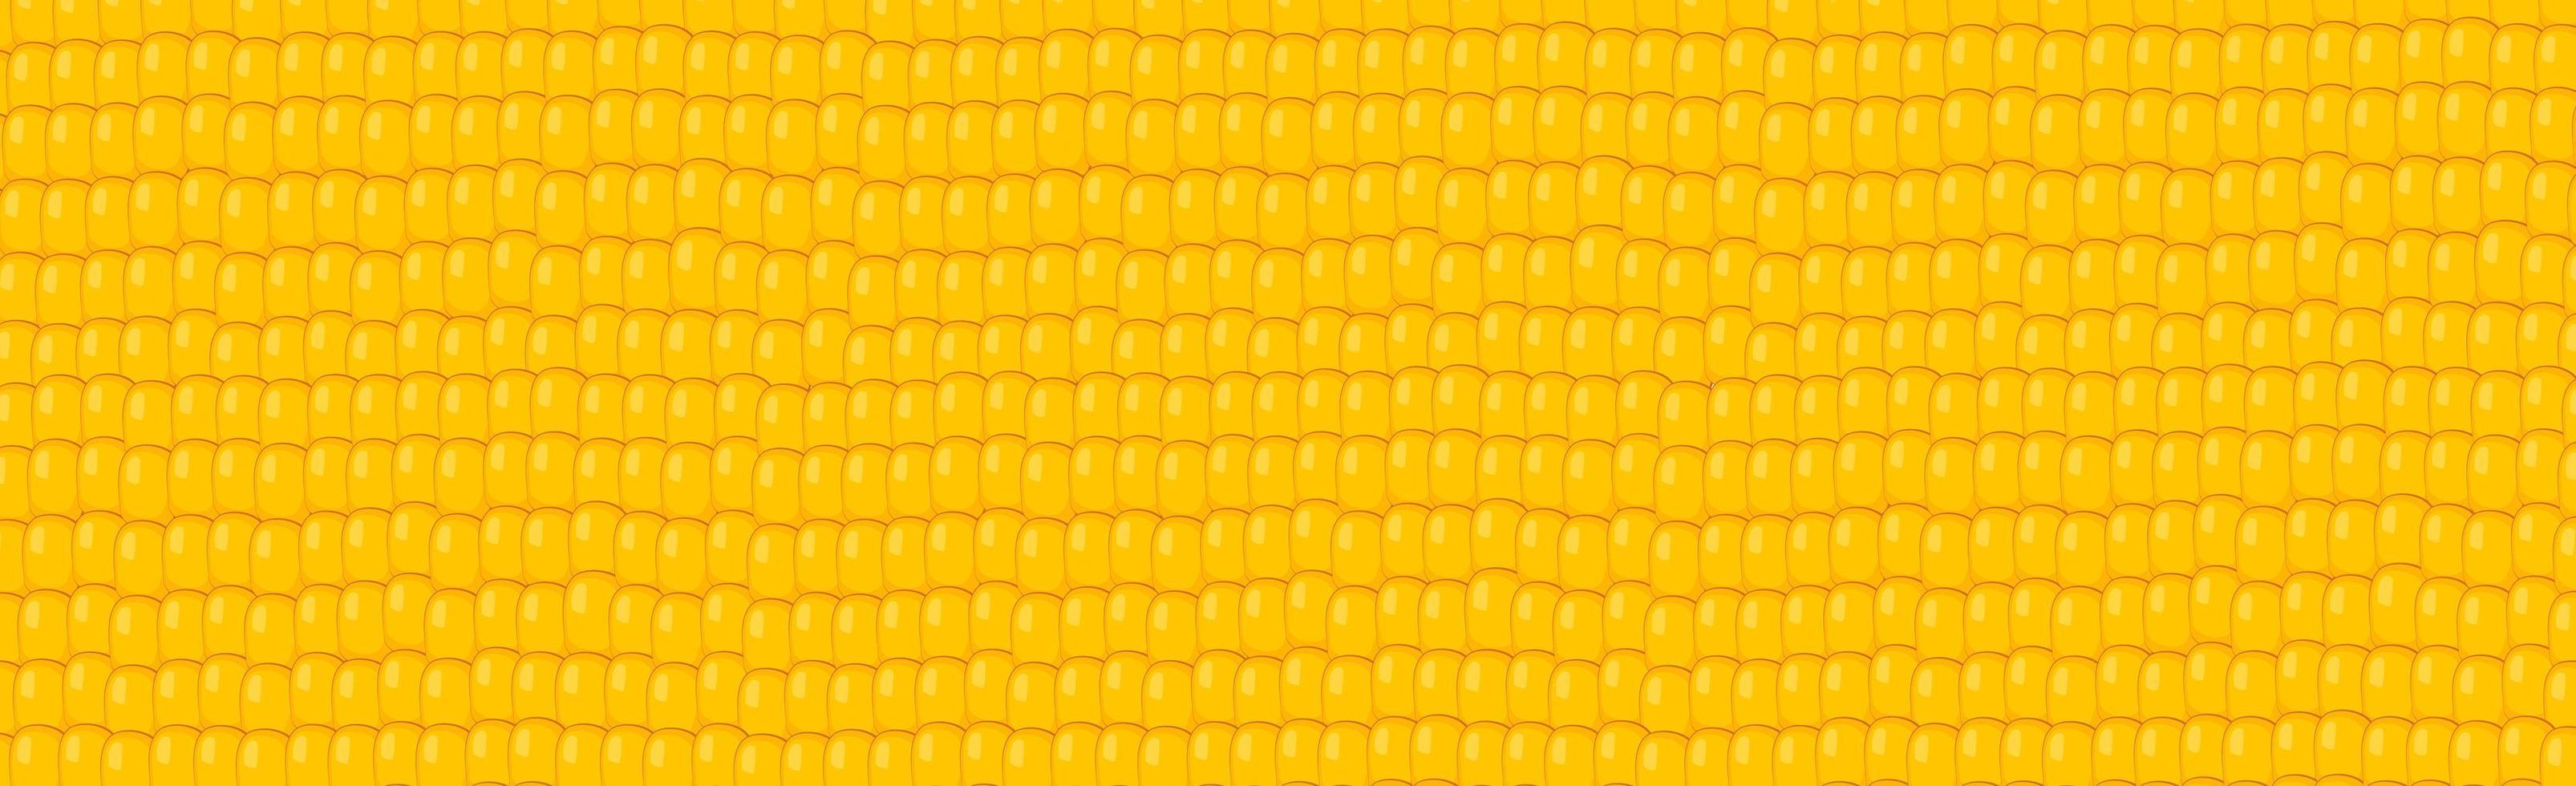 amarillo panorámico - fondo de grano de maíz naranja - vector